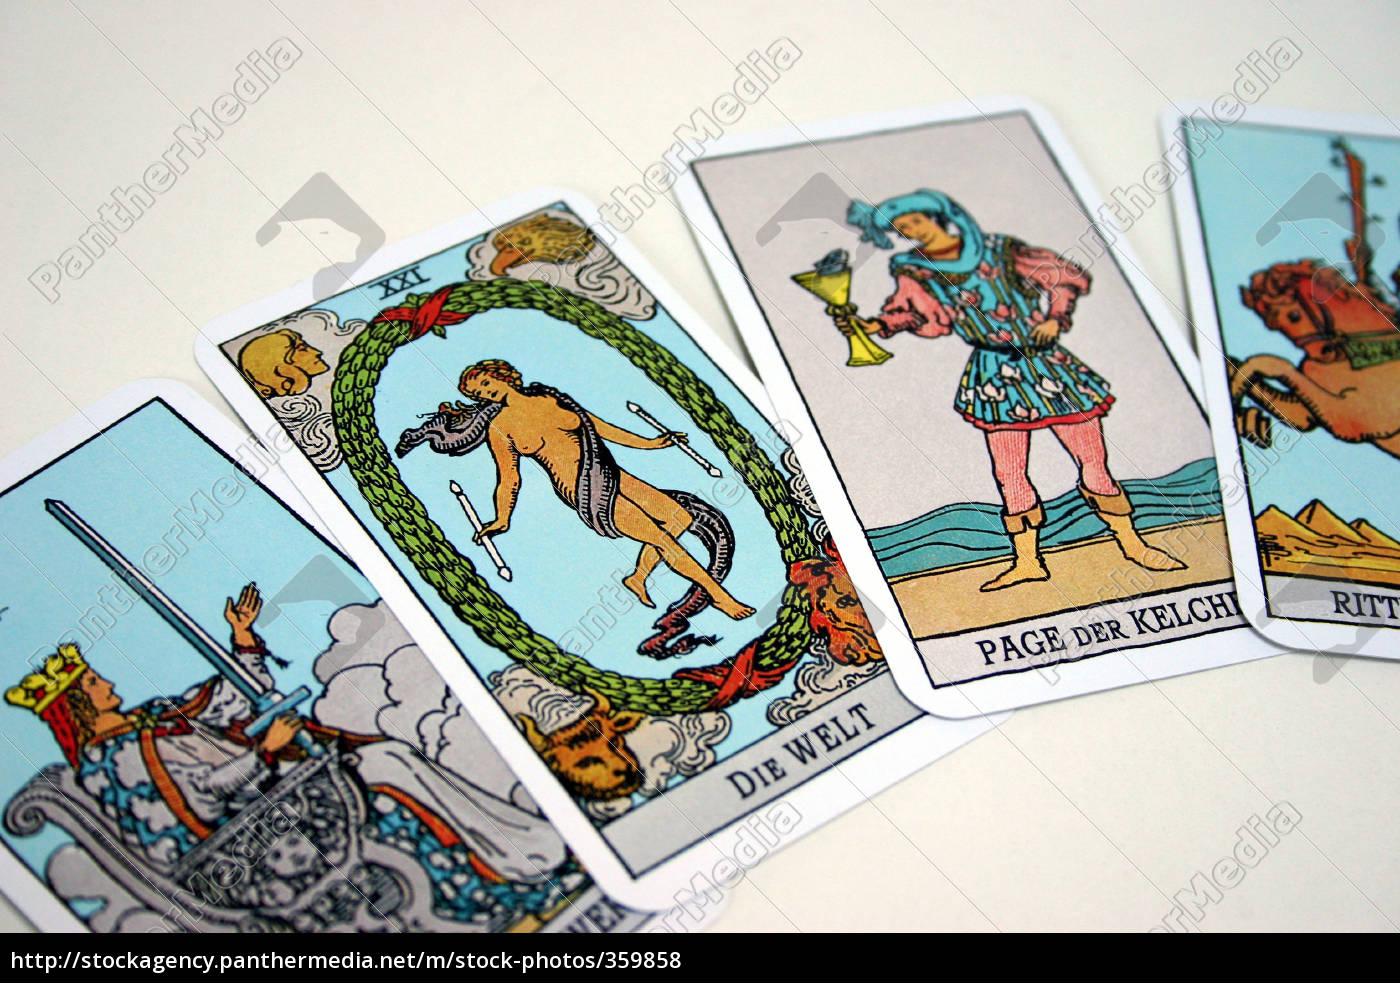 cartas de tarot 1 - Stockphoto - #359858 | Agencia de stock PantherMedia